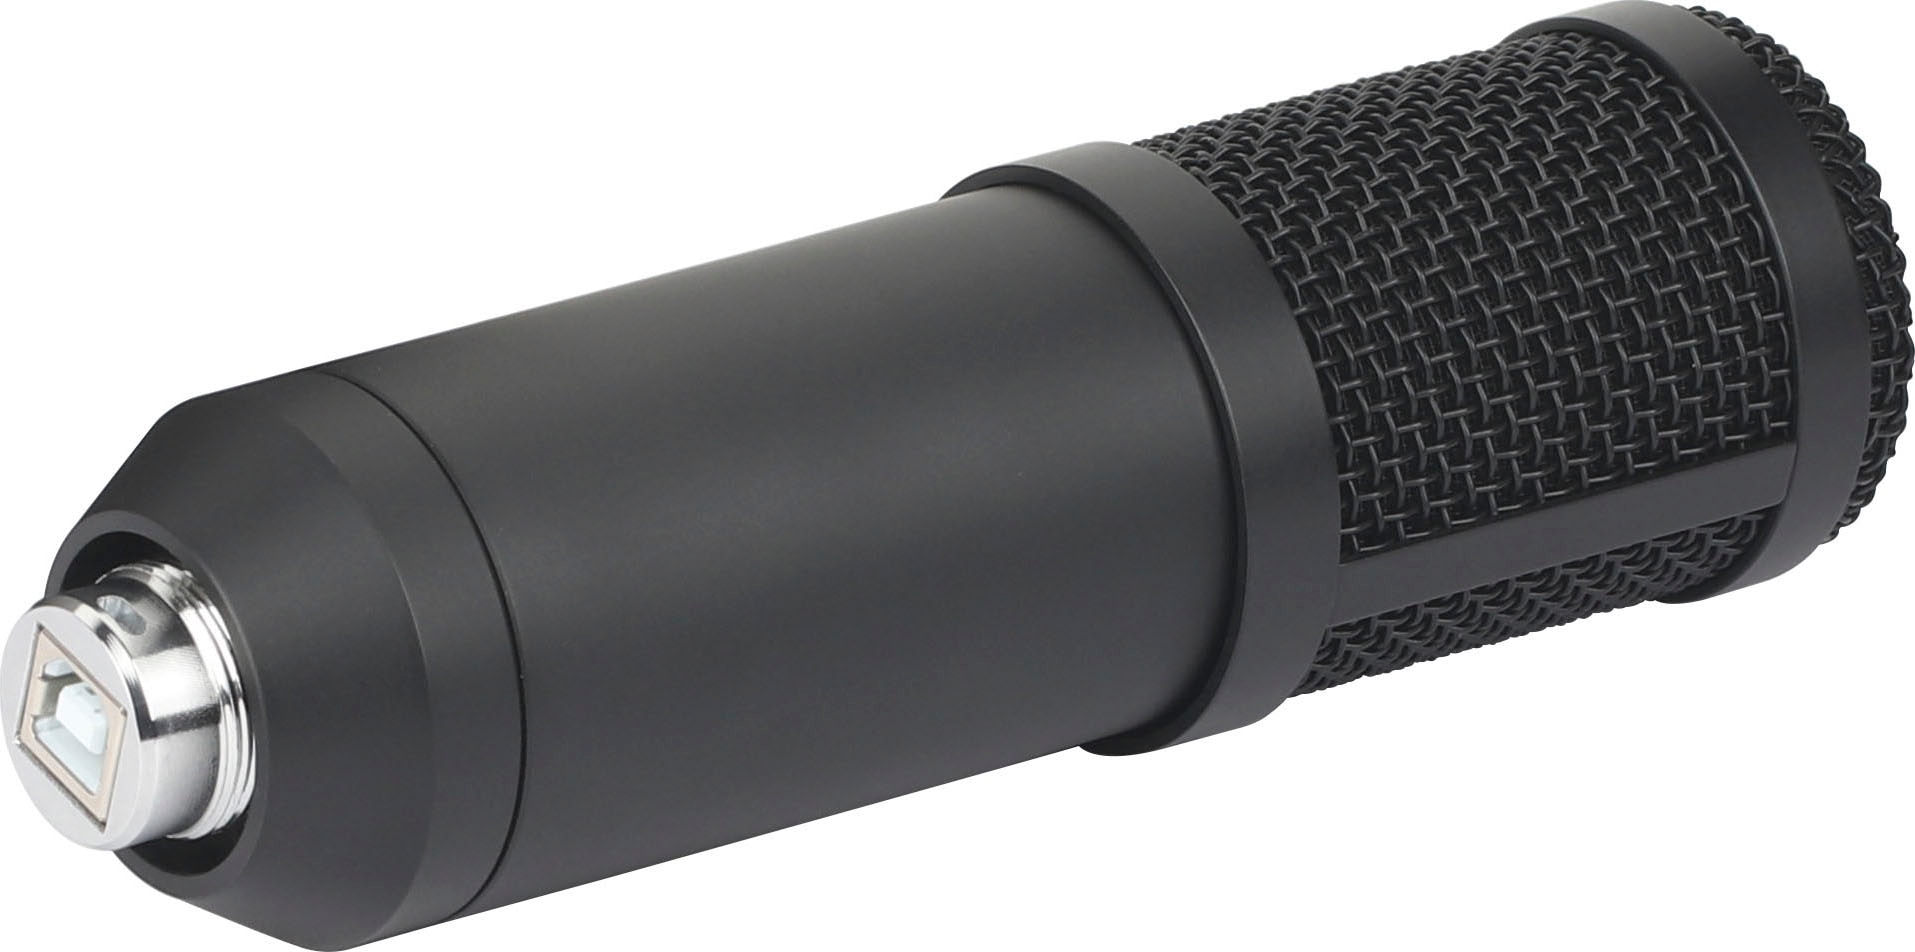 Hyrican Mikrofon & Mikrofon bei Popschutz« ST-SM50 Spinne OTTO »USB Set Streaming Mikrofonarm, mit